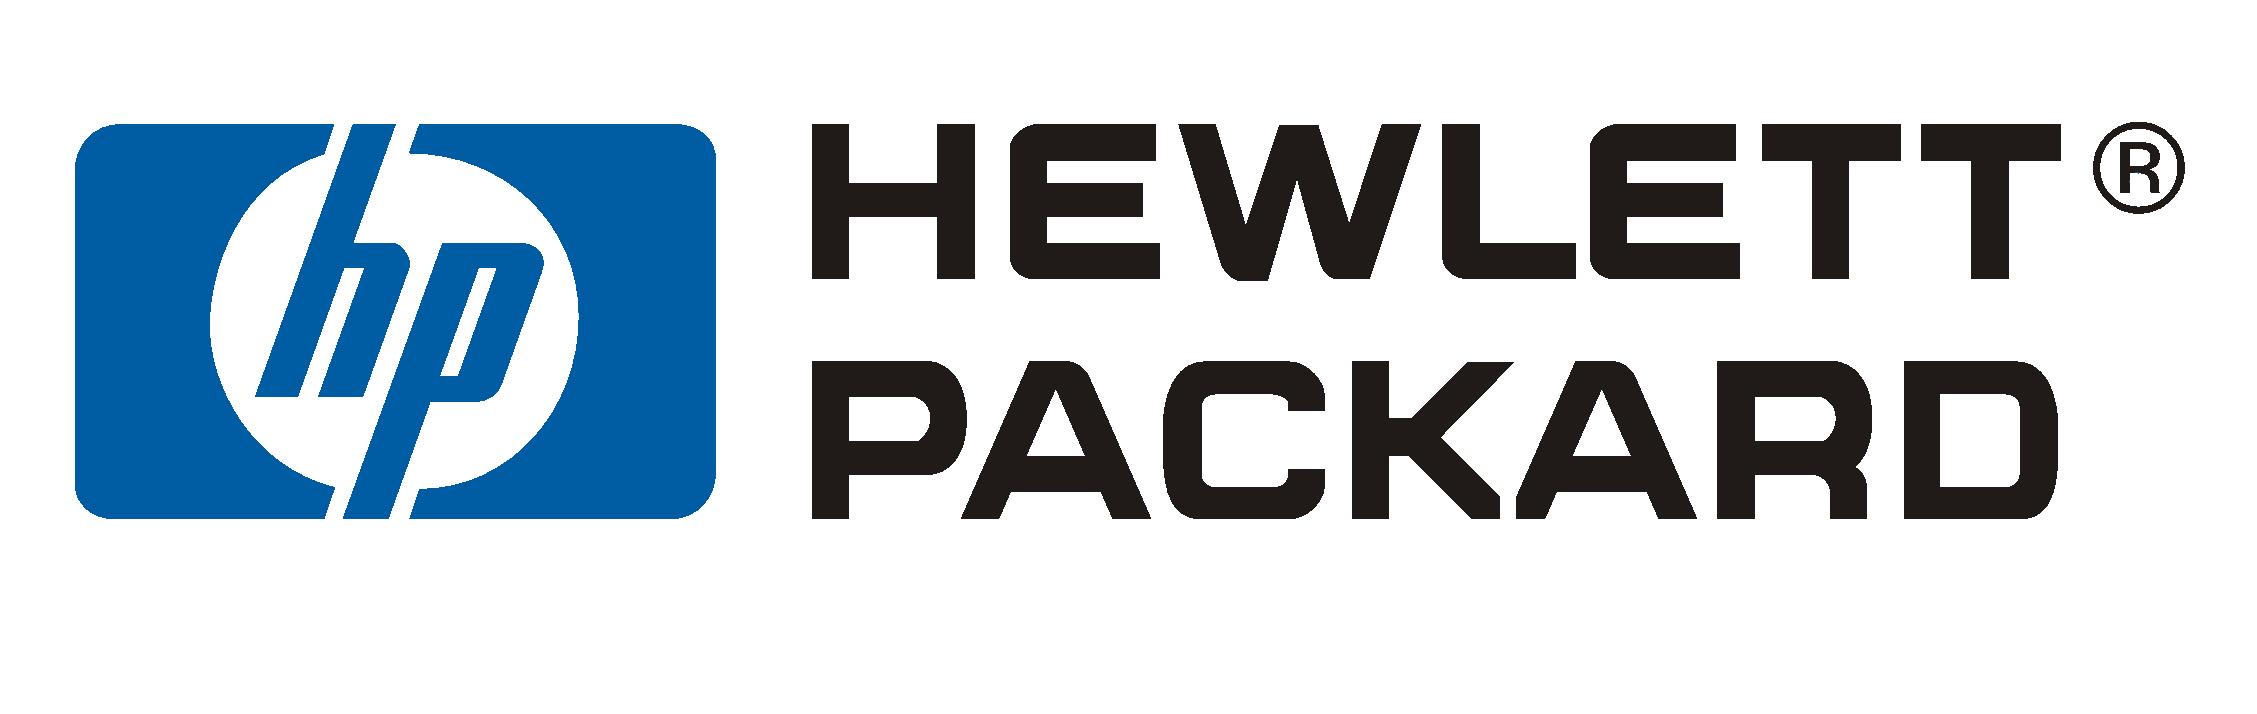 Hewlett-Packard Logo - HP Logo, Hewlett-Packard symbol meaning, history and evolution